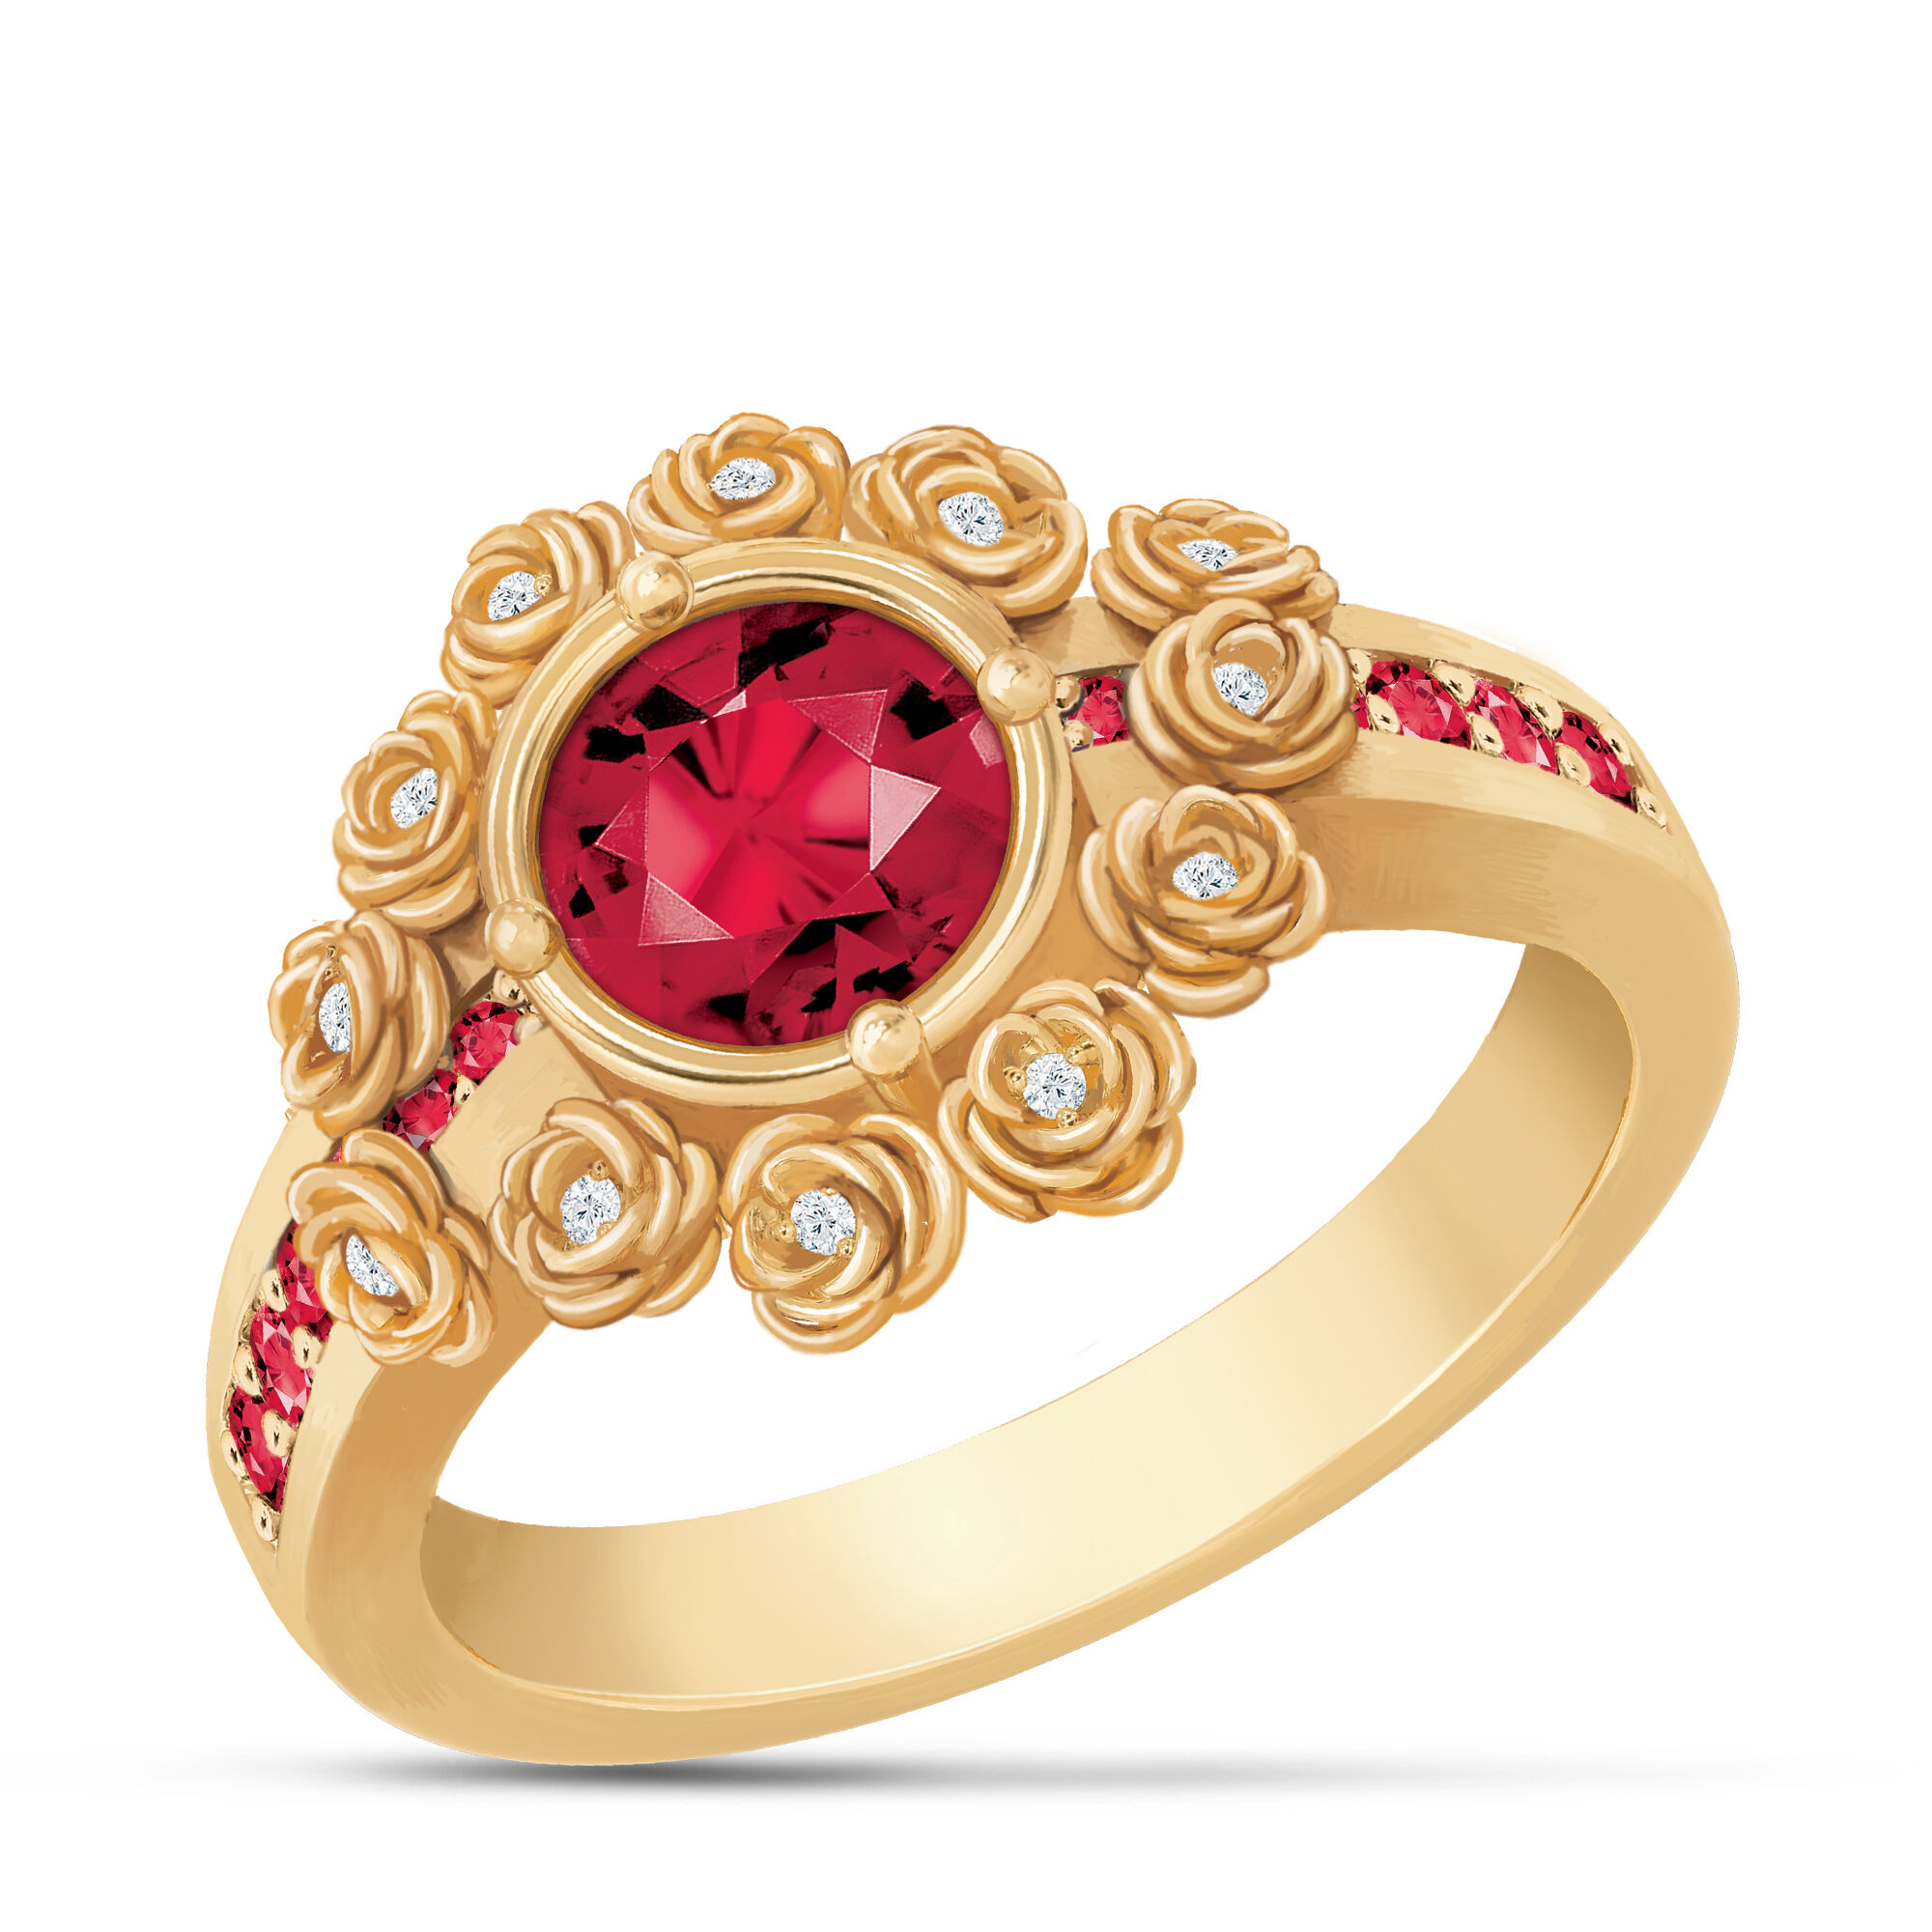 A Dozen Roses Birthstone Diamond Ring 6874 0018 a main